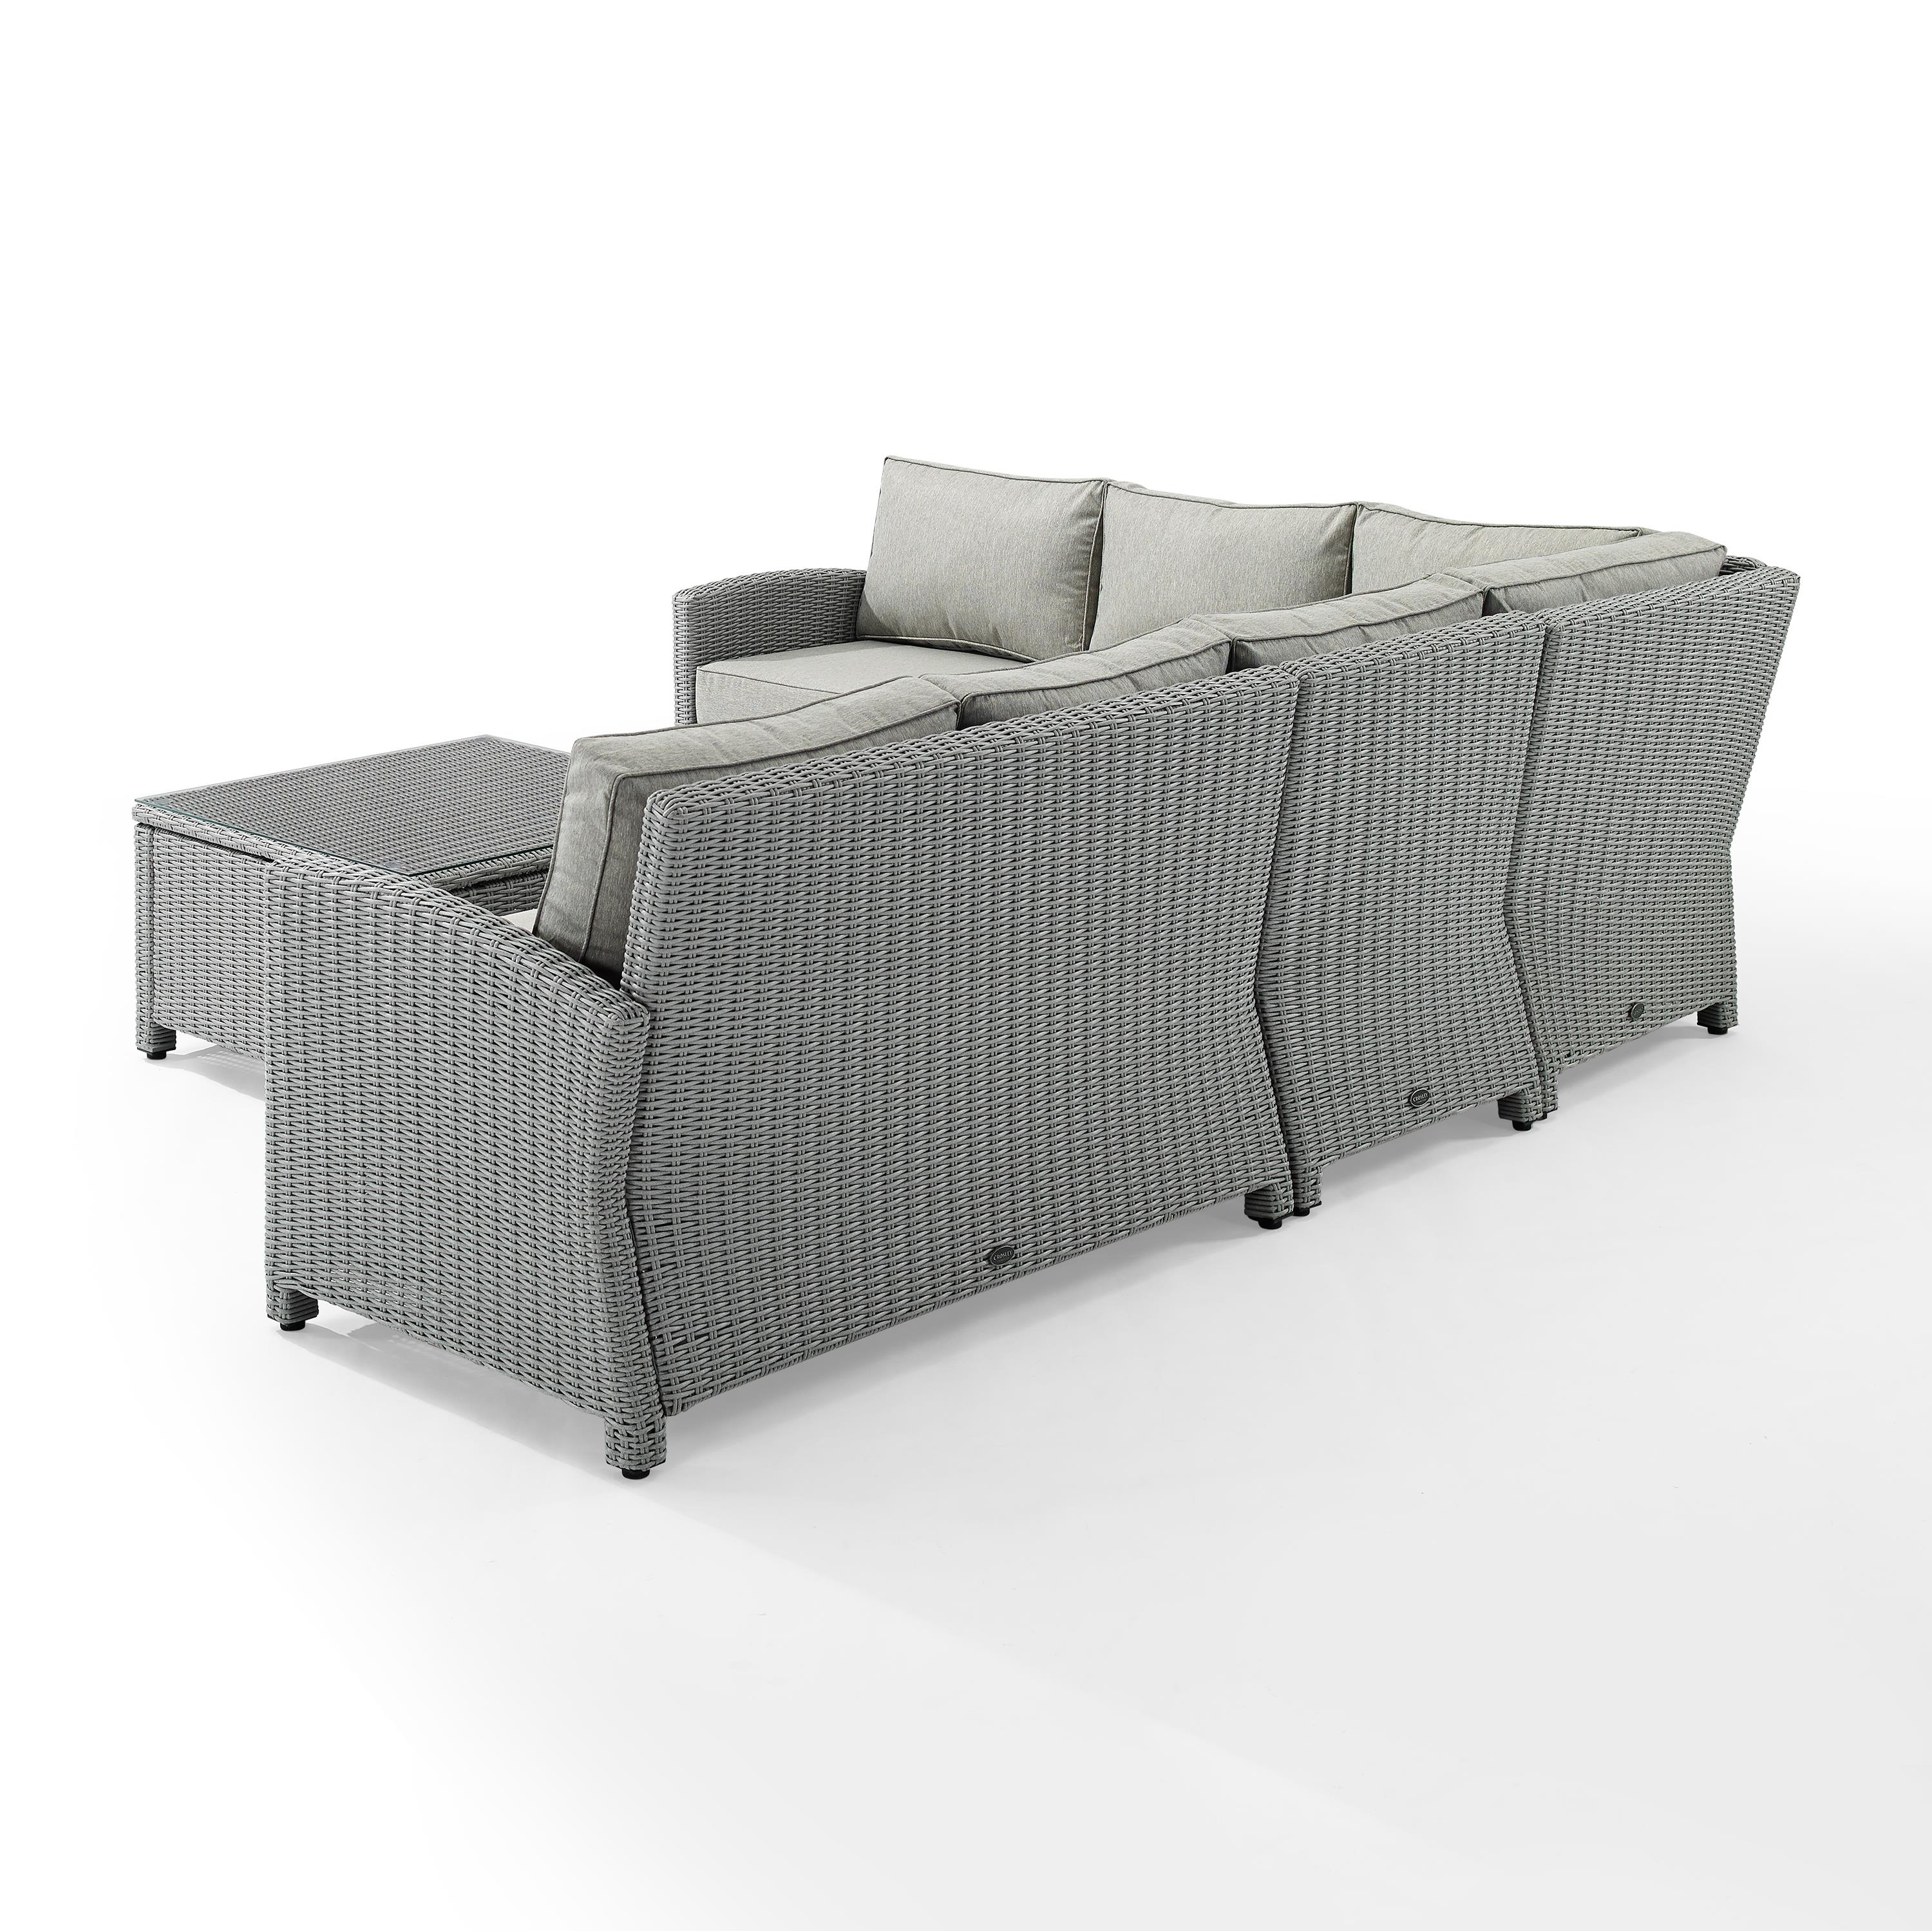 Crosley Furniture Bradenton 5-Piece Outdoor Sectional Sofa Wicker Conversation Patio Furniture Set for Deck - image 3 of 9